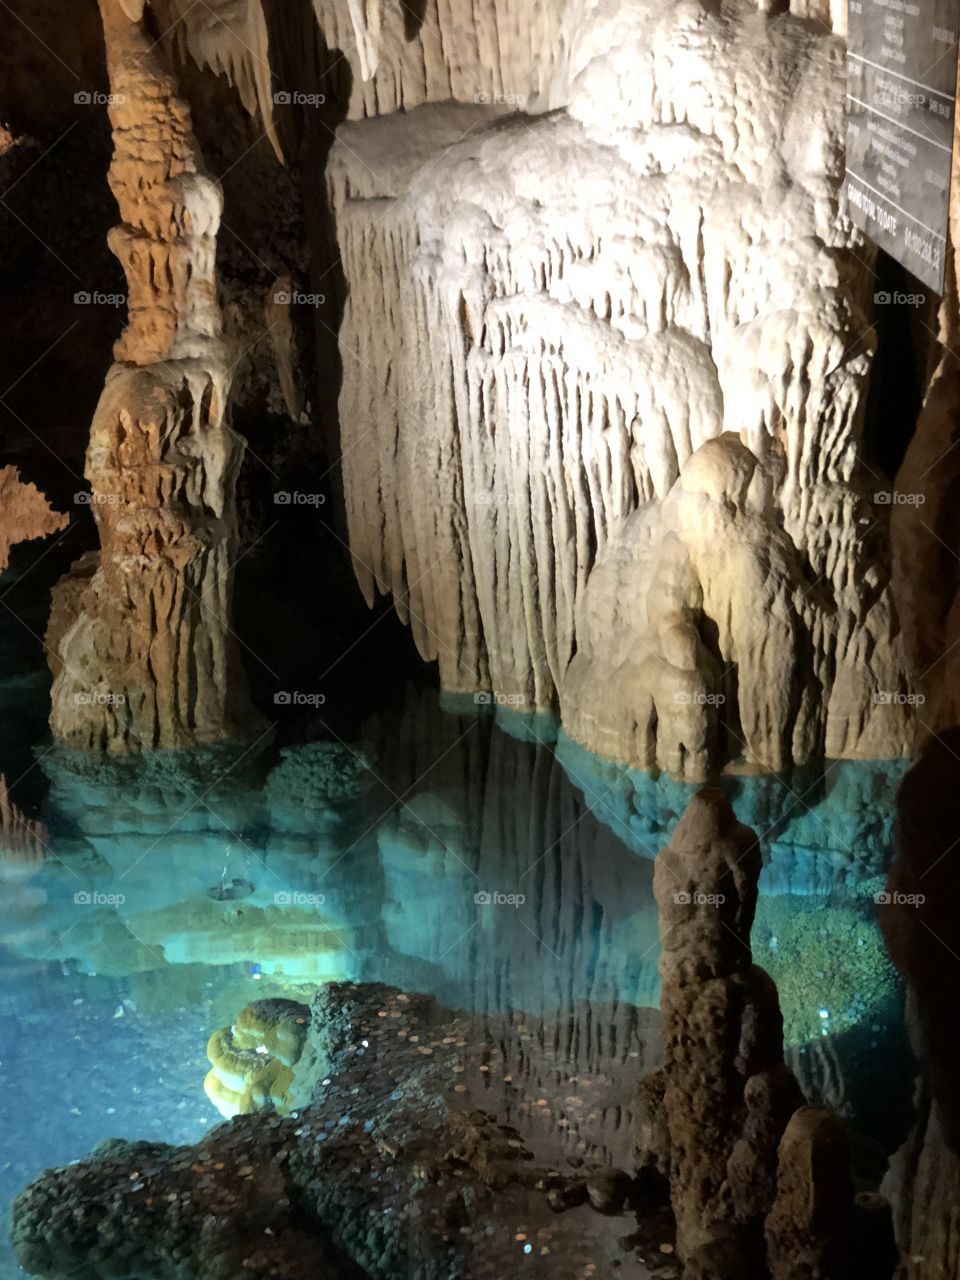 Luray Caverns spelunking trip!